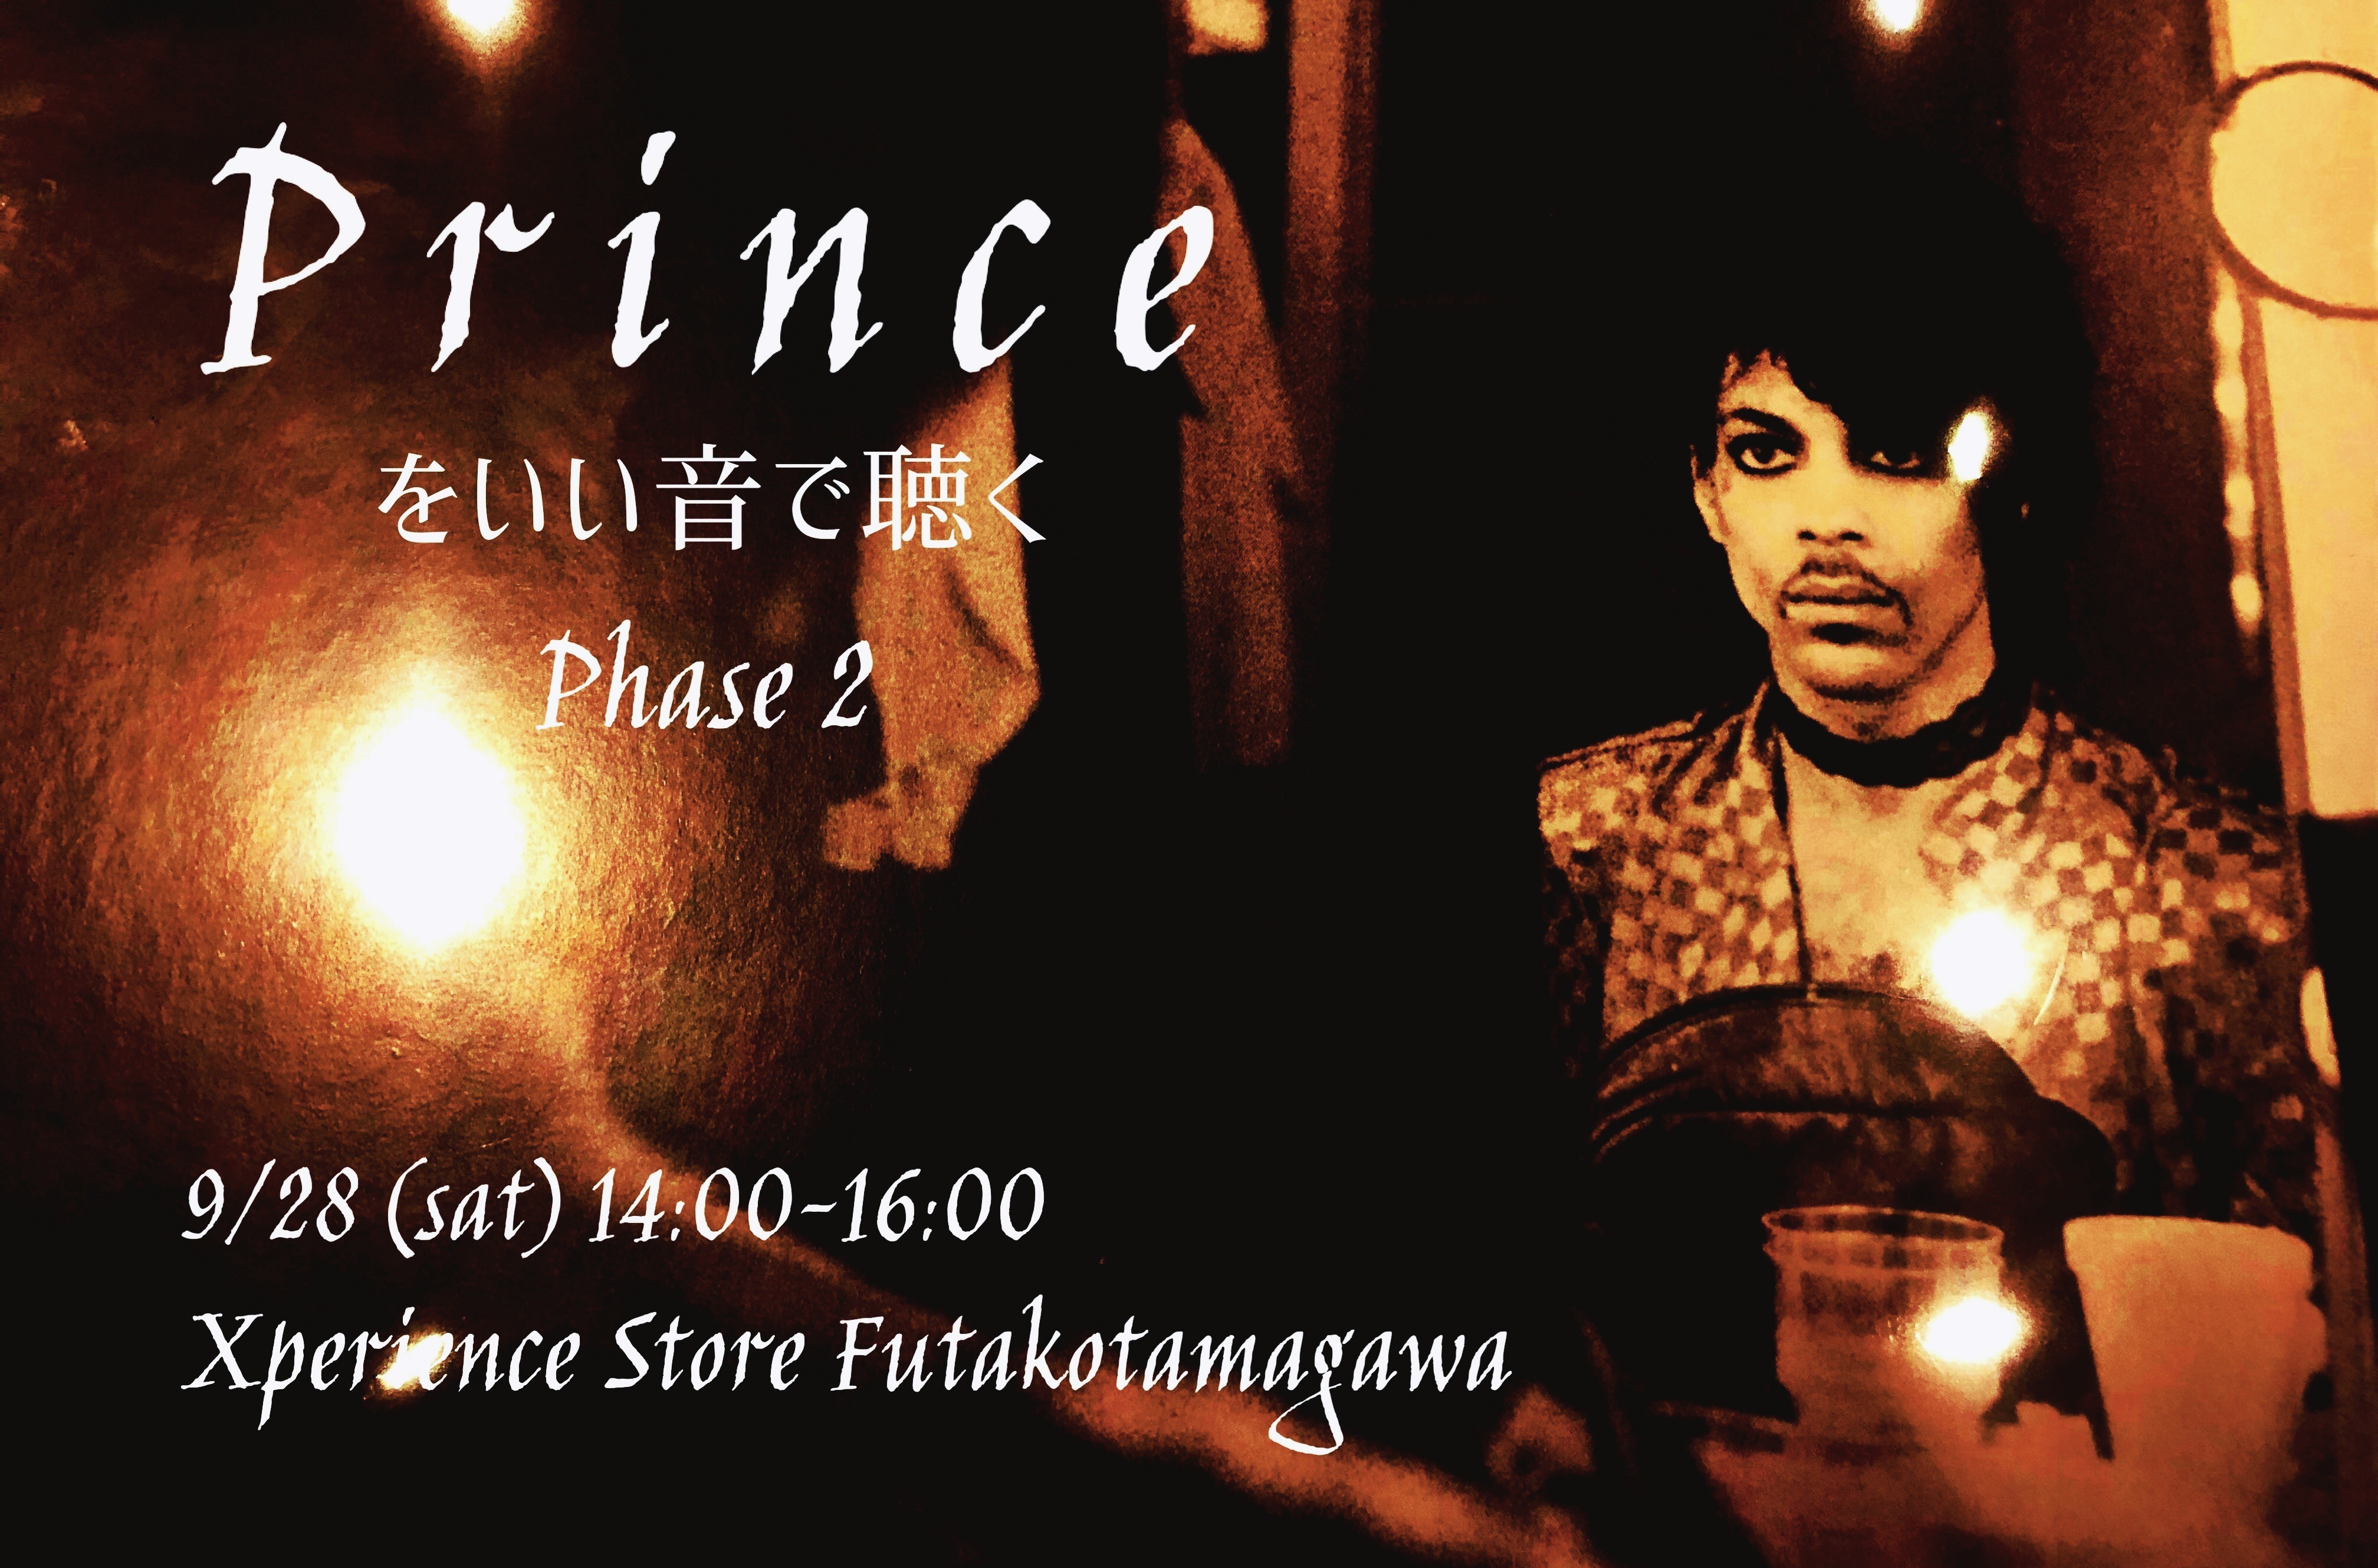 Playlist of “Prince をいい音で聴く Phase 2” SEP. 28 2019 @Nikotama